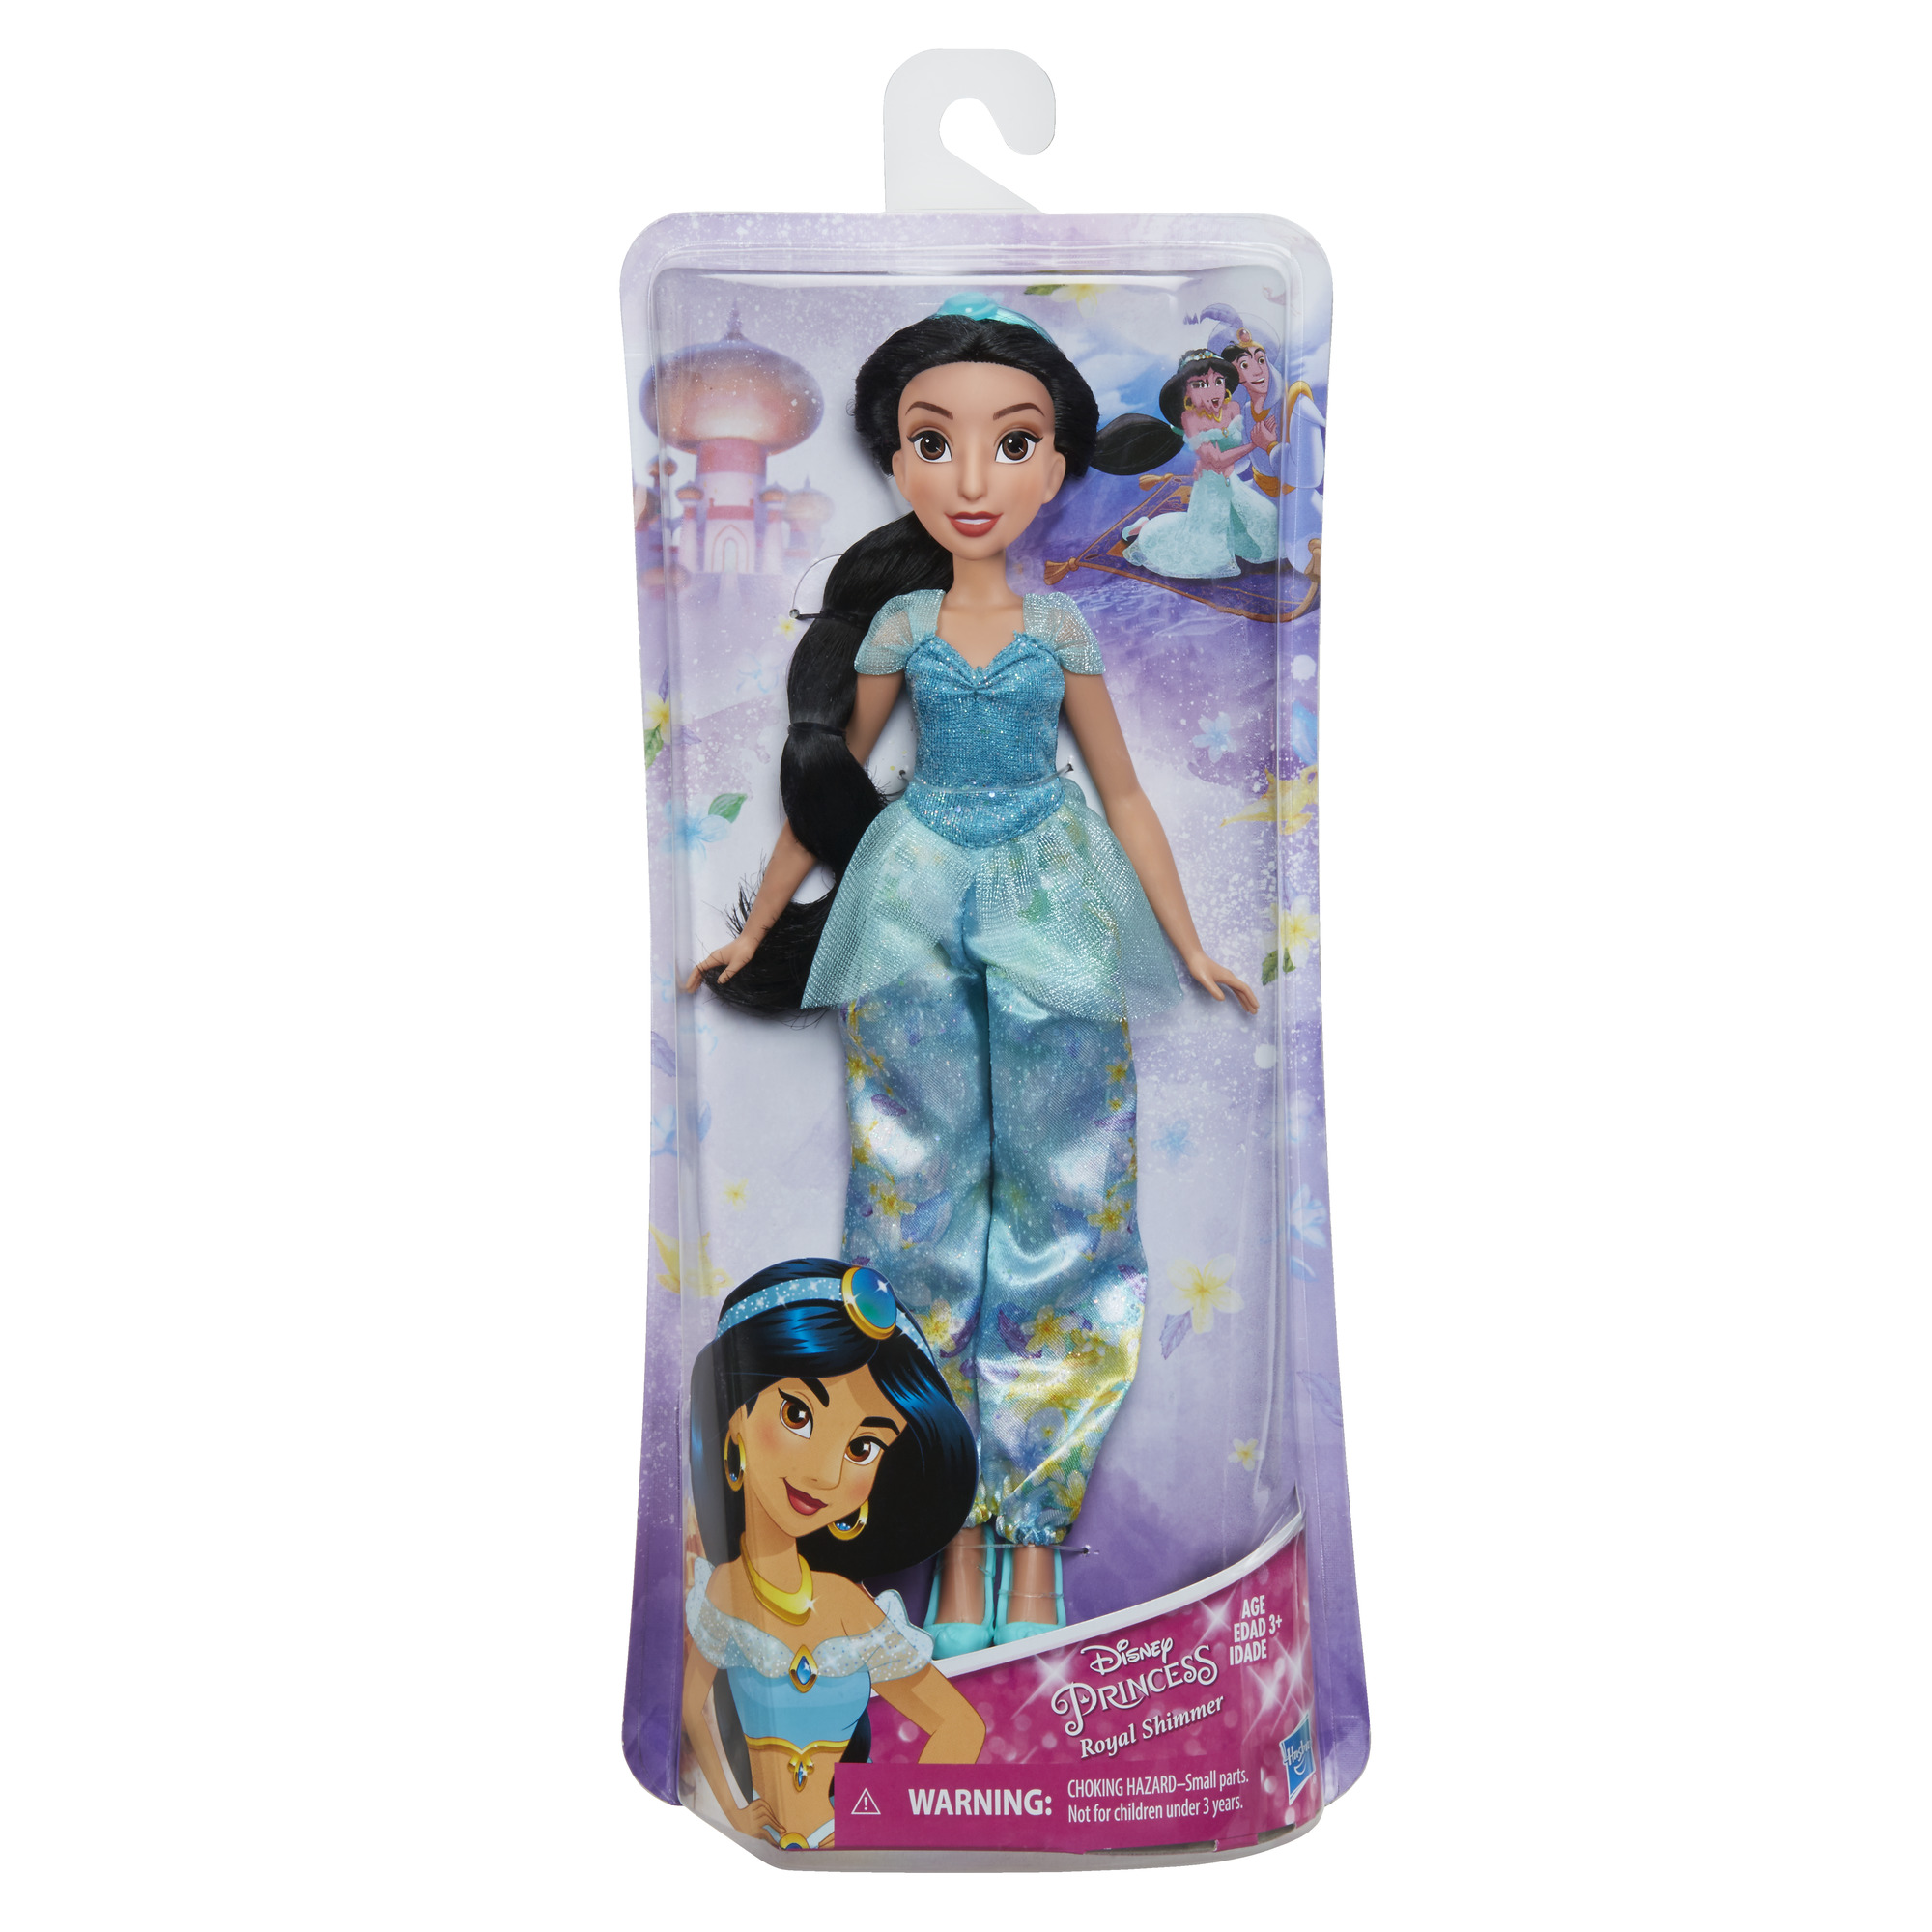 Disney Princess Royal Shimmer Jasmine Doll, Ages 3 and Up - image 2 of 7